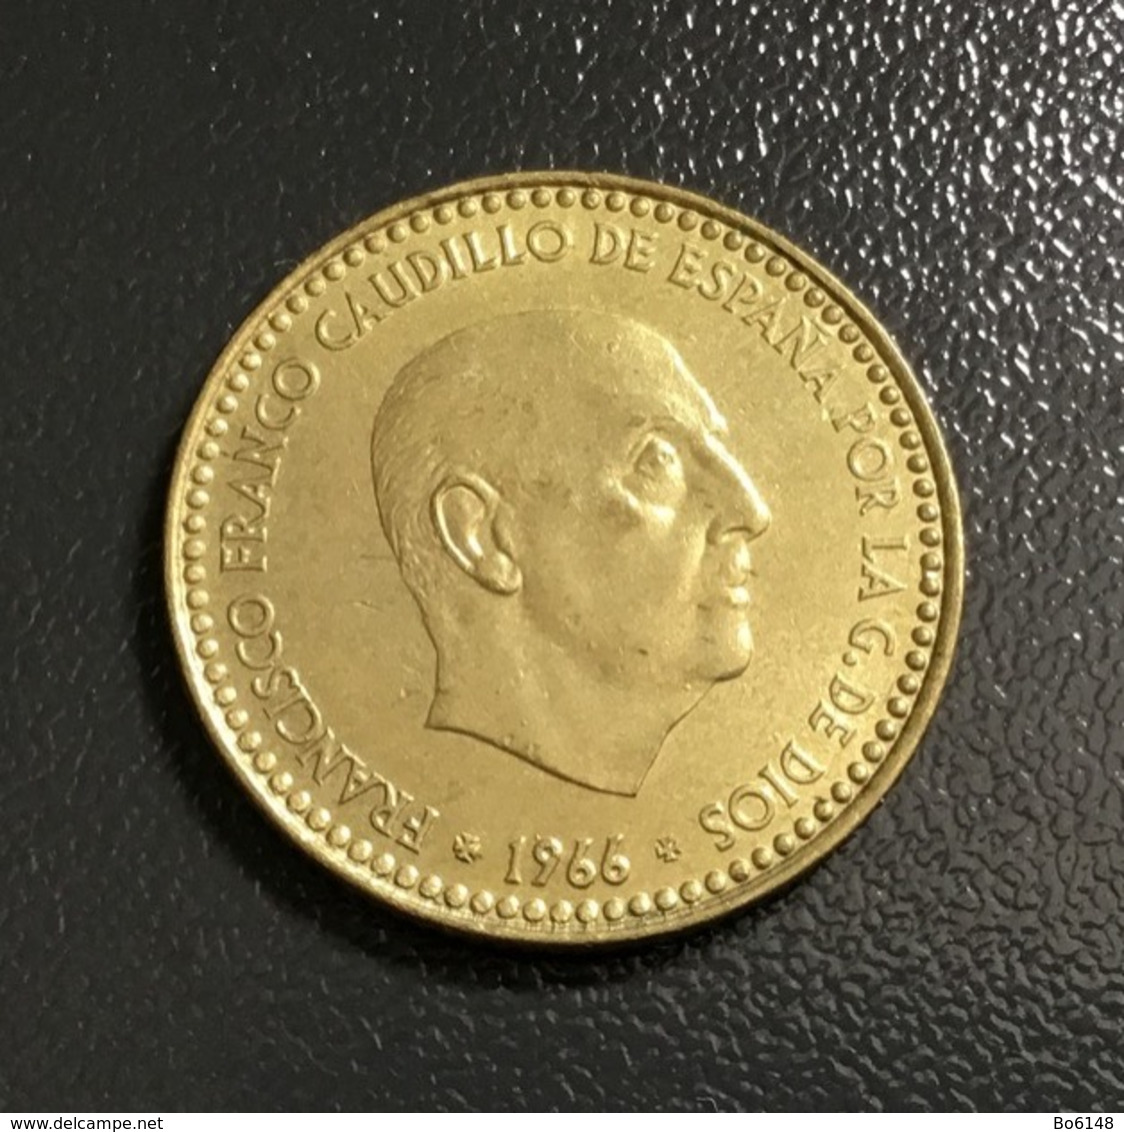 SPAGNA - ESPANA - 1966 - Moneta 1 PESETA - Effige Franco , Ottima - 1 Peseta